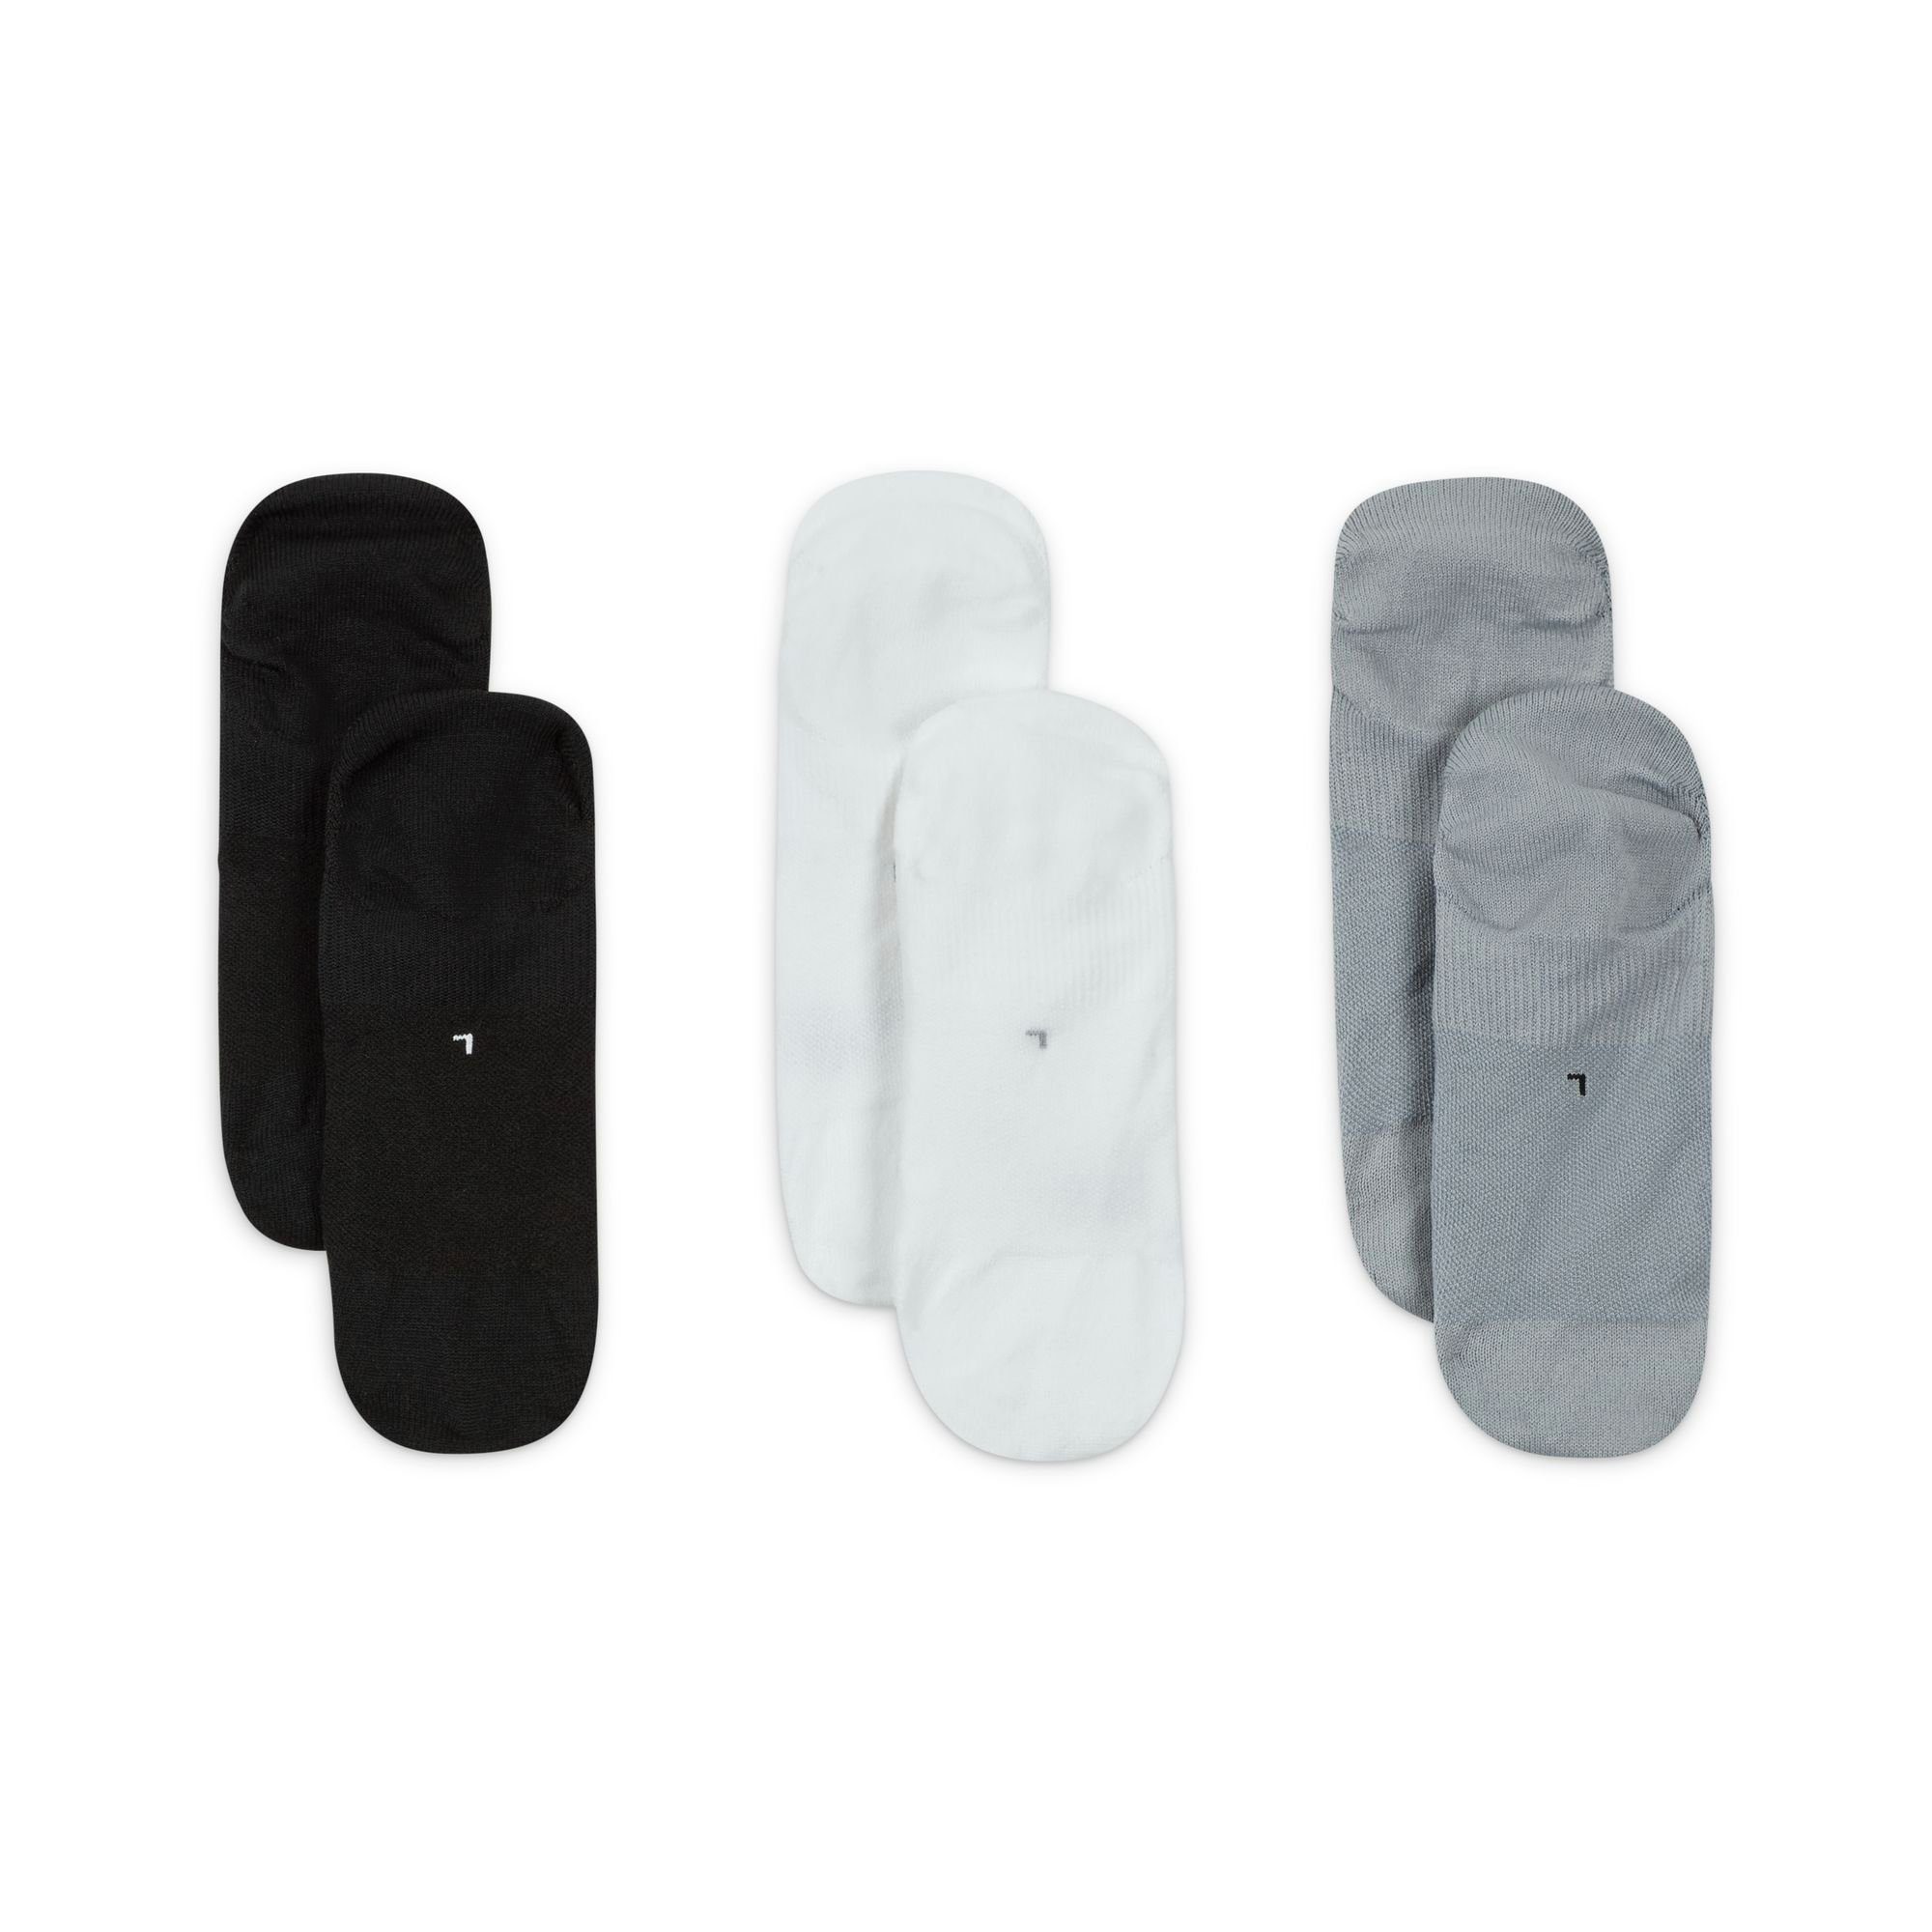 Füßlinge 1x 1x Nike (3-Paar) weiß schwarz, 1x grau, Mesh mit atmungsaktivem